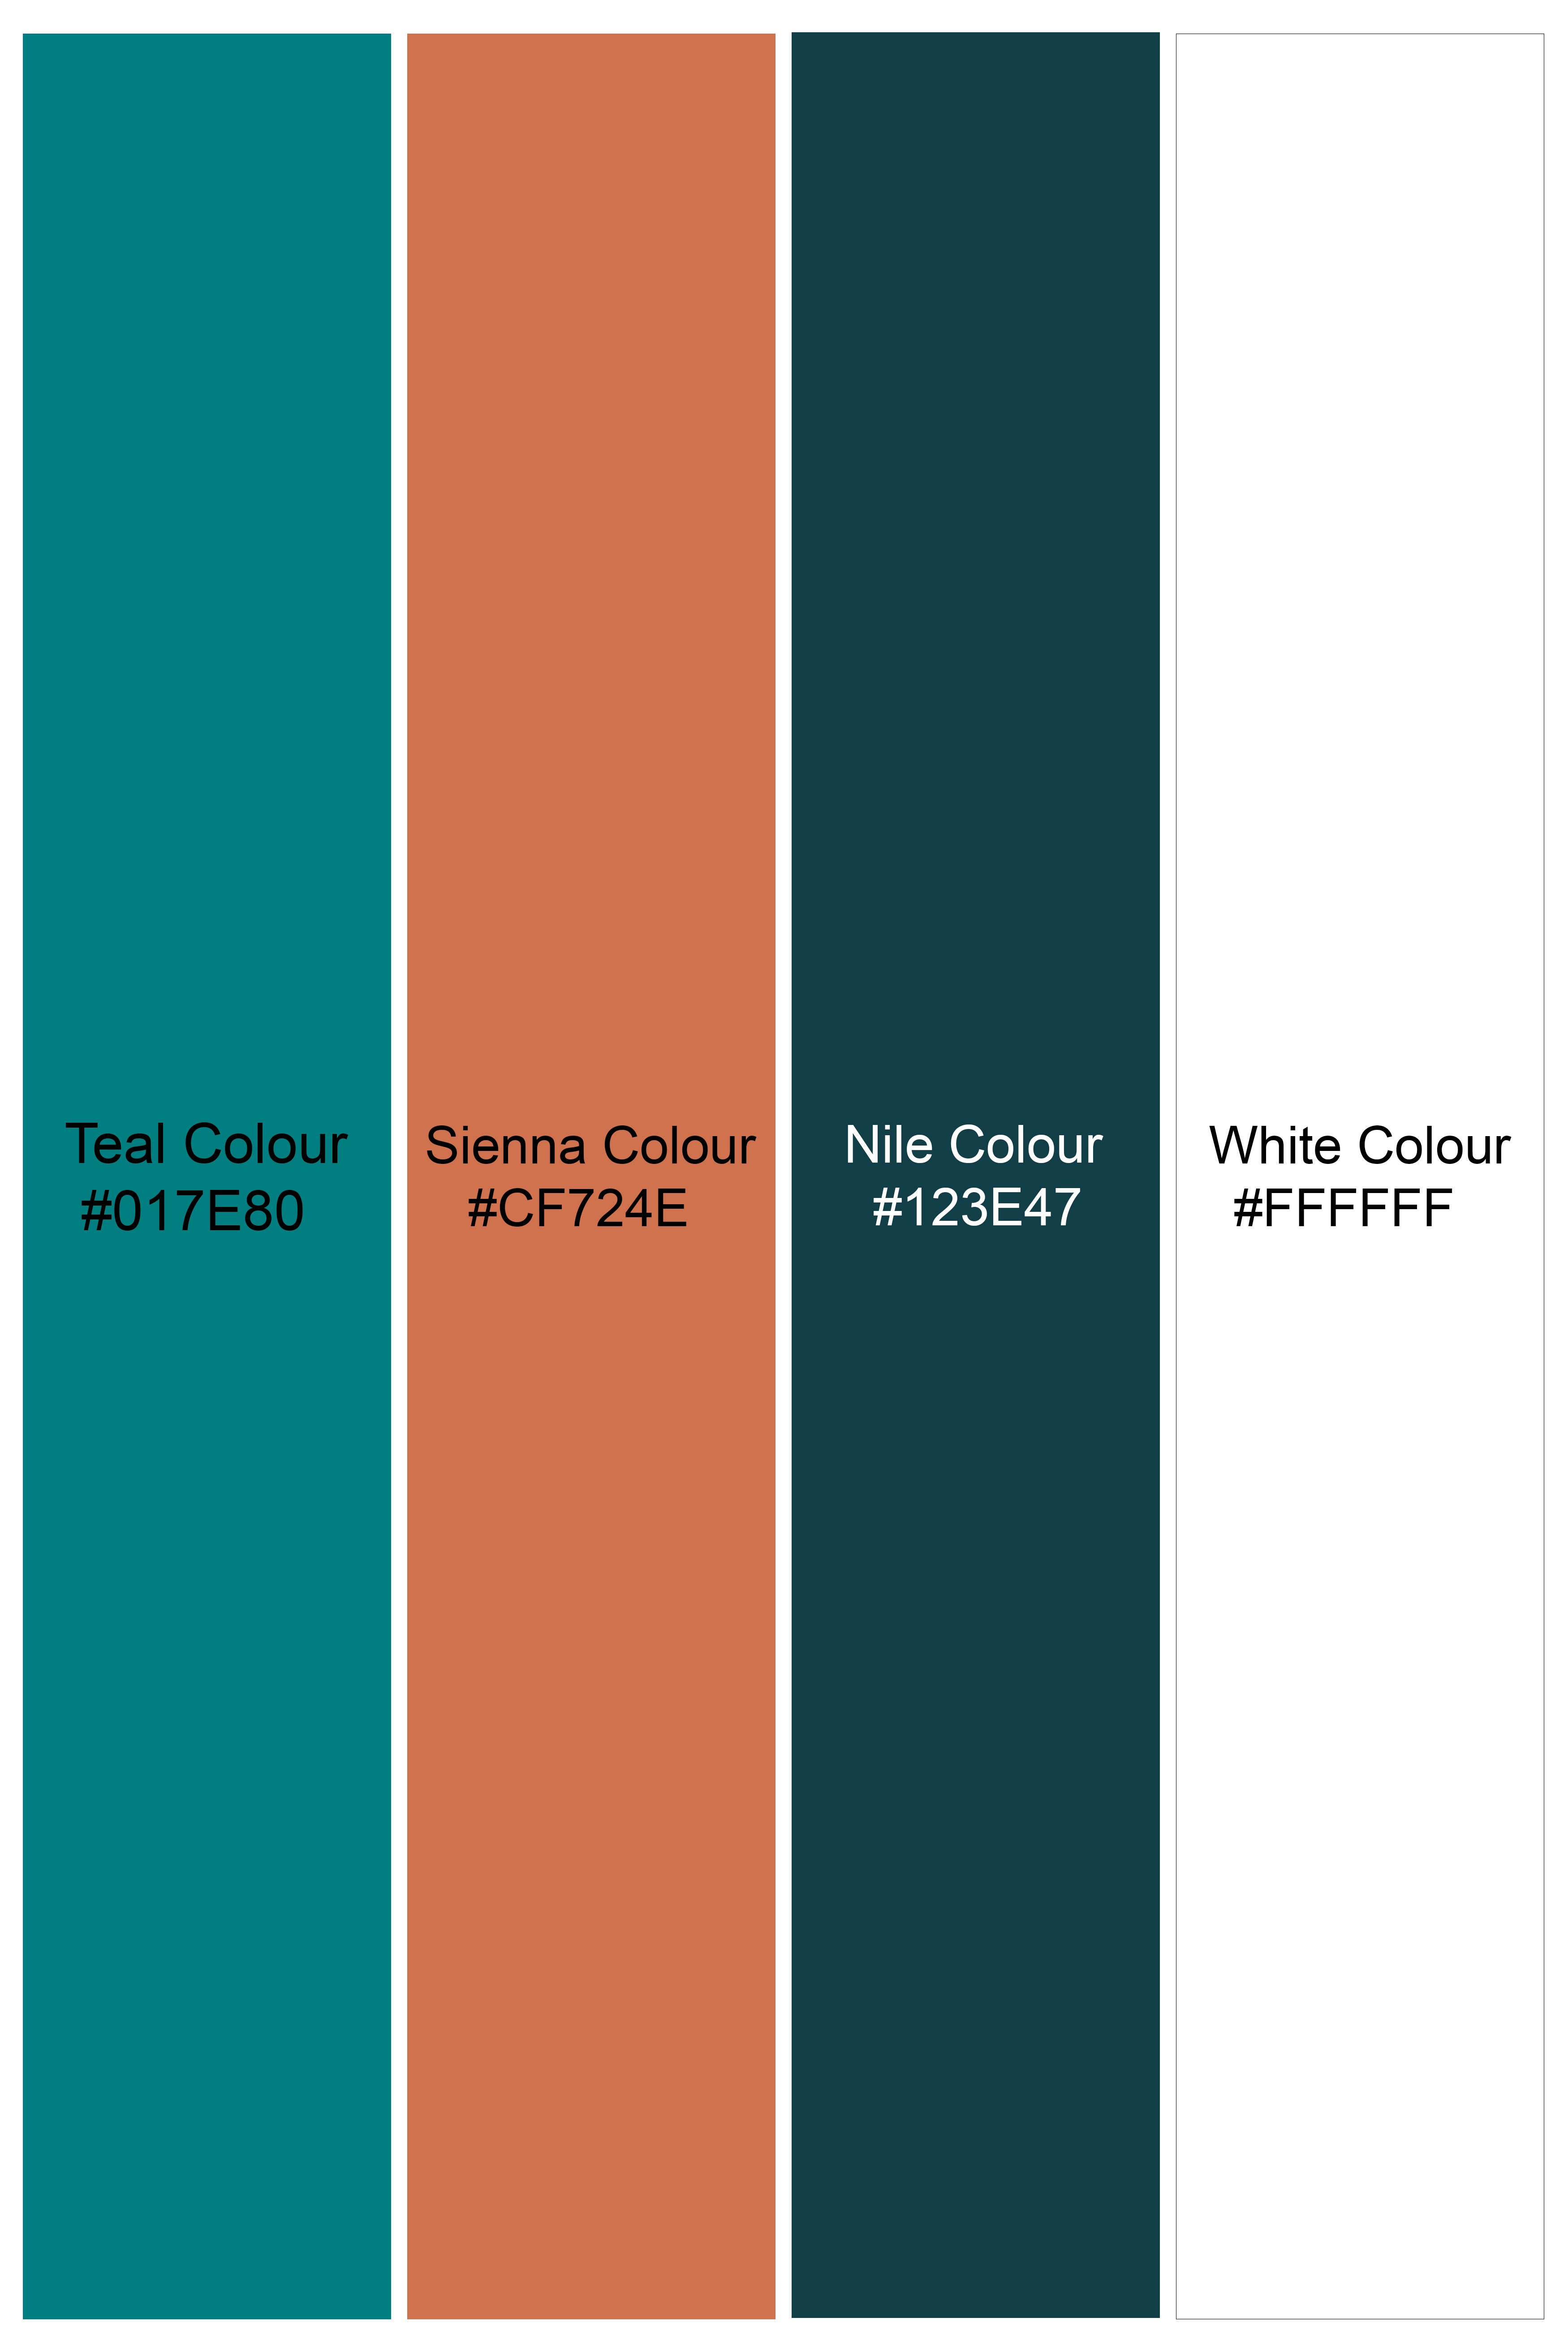 Teal Green and Bright White Multicolour Brand Elements Printed Subtle Sheen Super Soft Premium Cotton Designer Shirt 12093-38, 12093-H-38, 12093-39, 12093-H-39, 12093-40, 12093-H-40, 12093-42, 12093-H-42, 12093-44, 12093-H-44, 12093-46, 12093-H-46, 12093-48, 12093-H-48, 12093-50, 12093-H-50, 12093-52, 12093-H-52